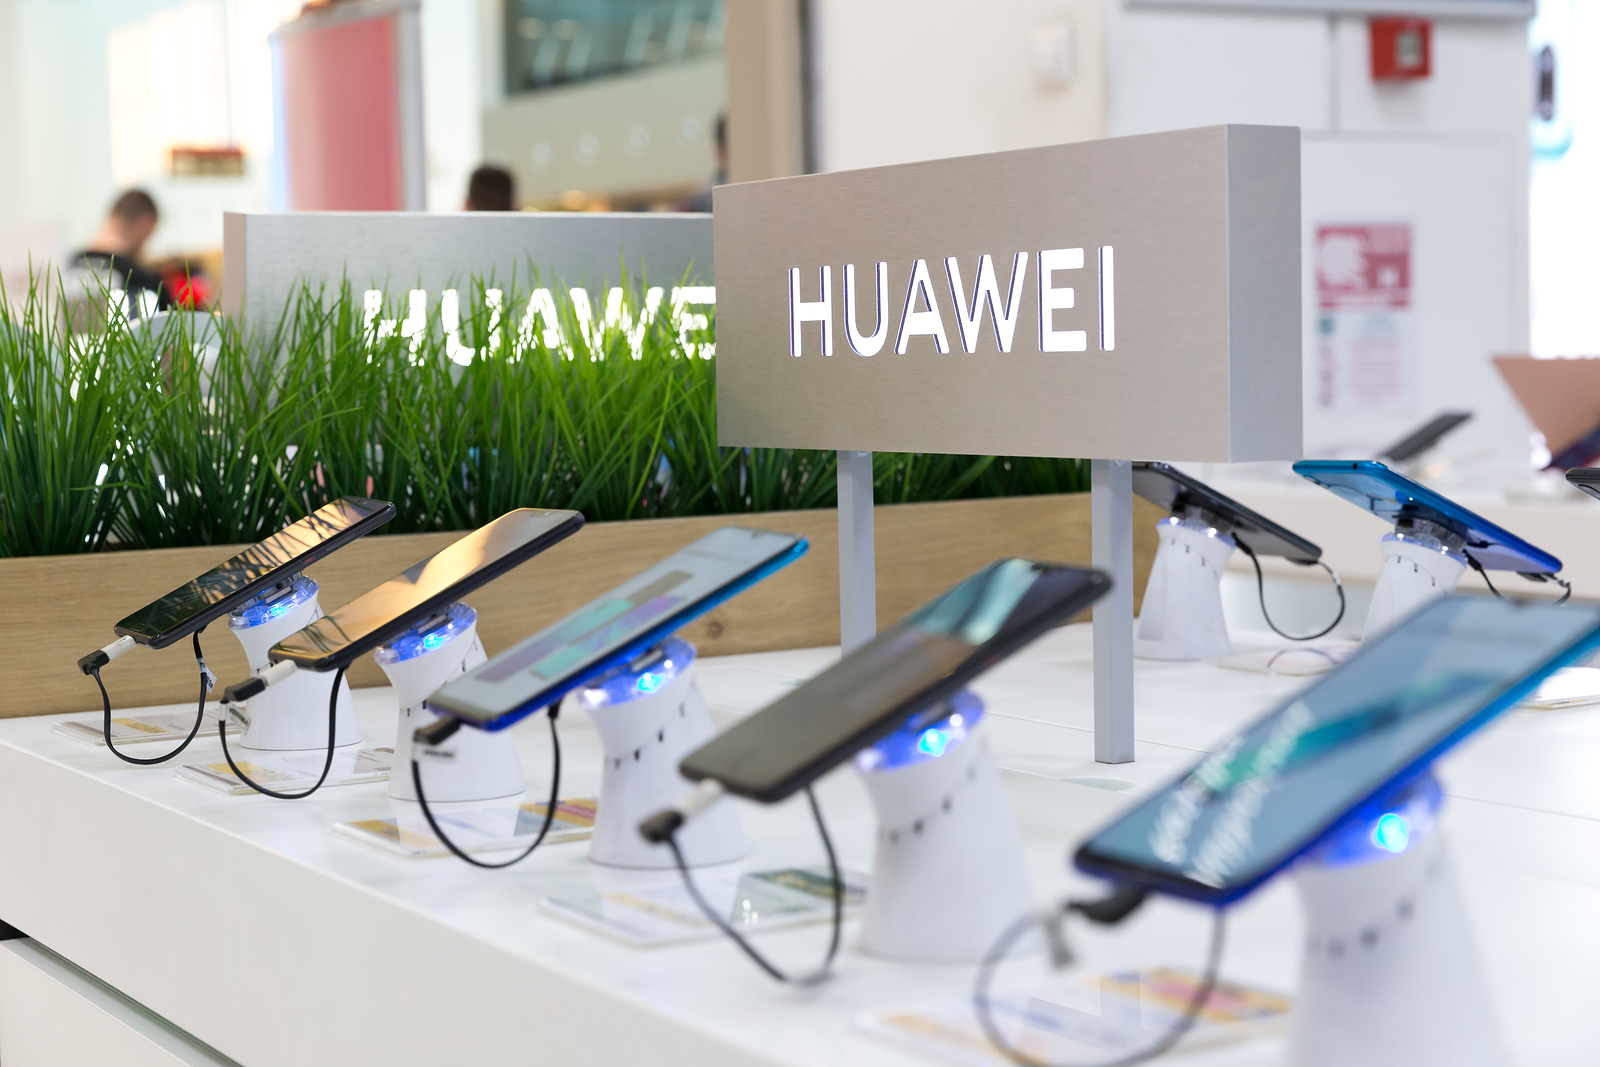 Hongmeng OS : Huawei lancerait un smartphone sous son OS avant fin 2019